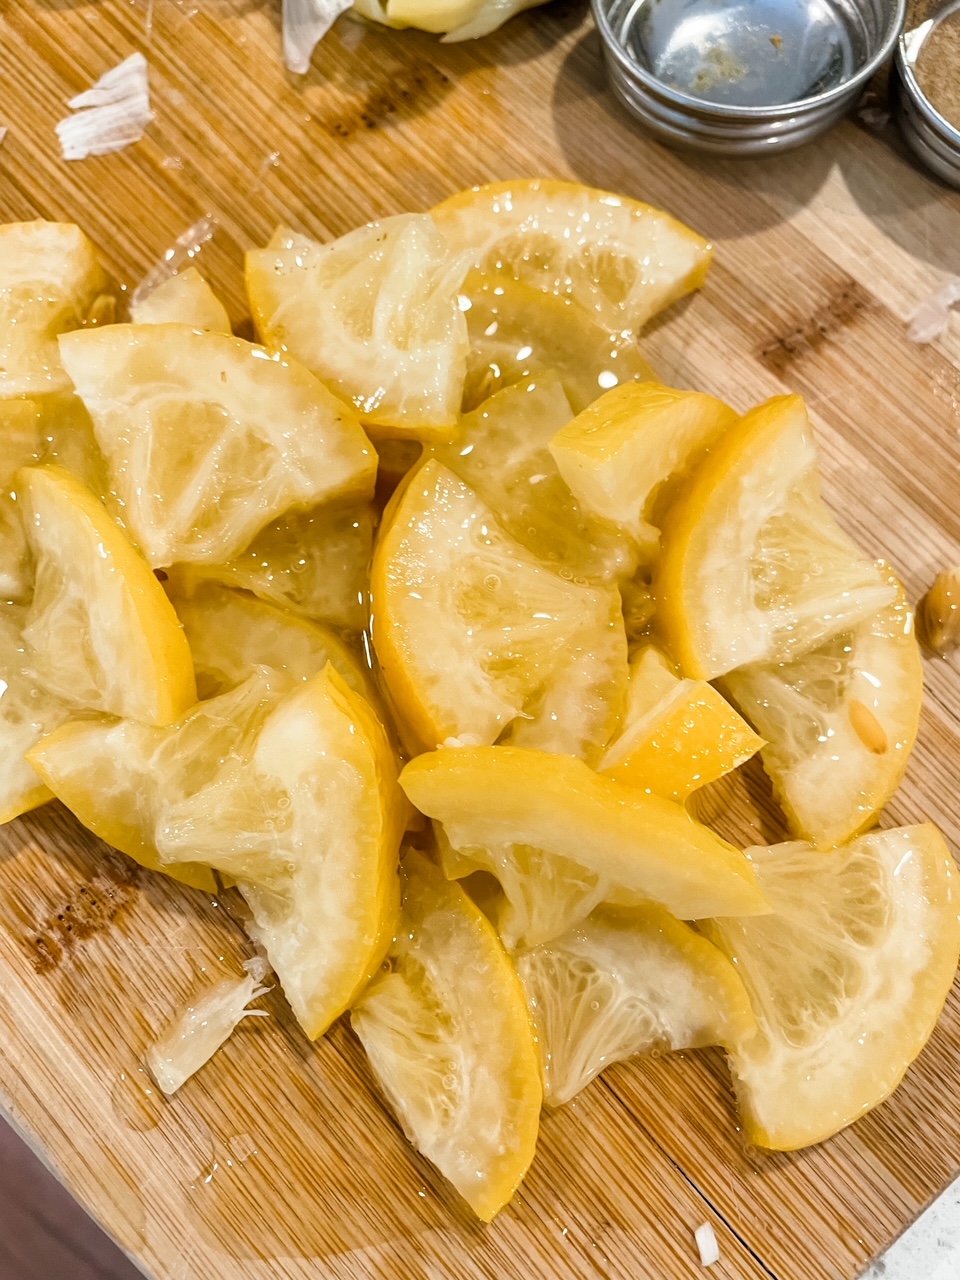 The chopped preserved lemon